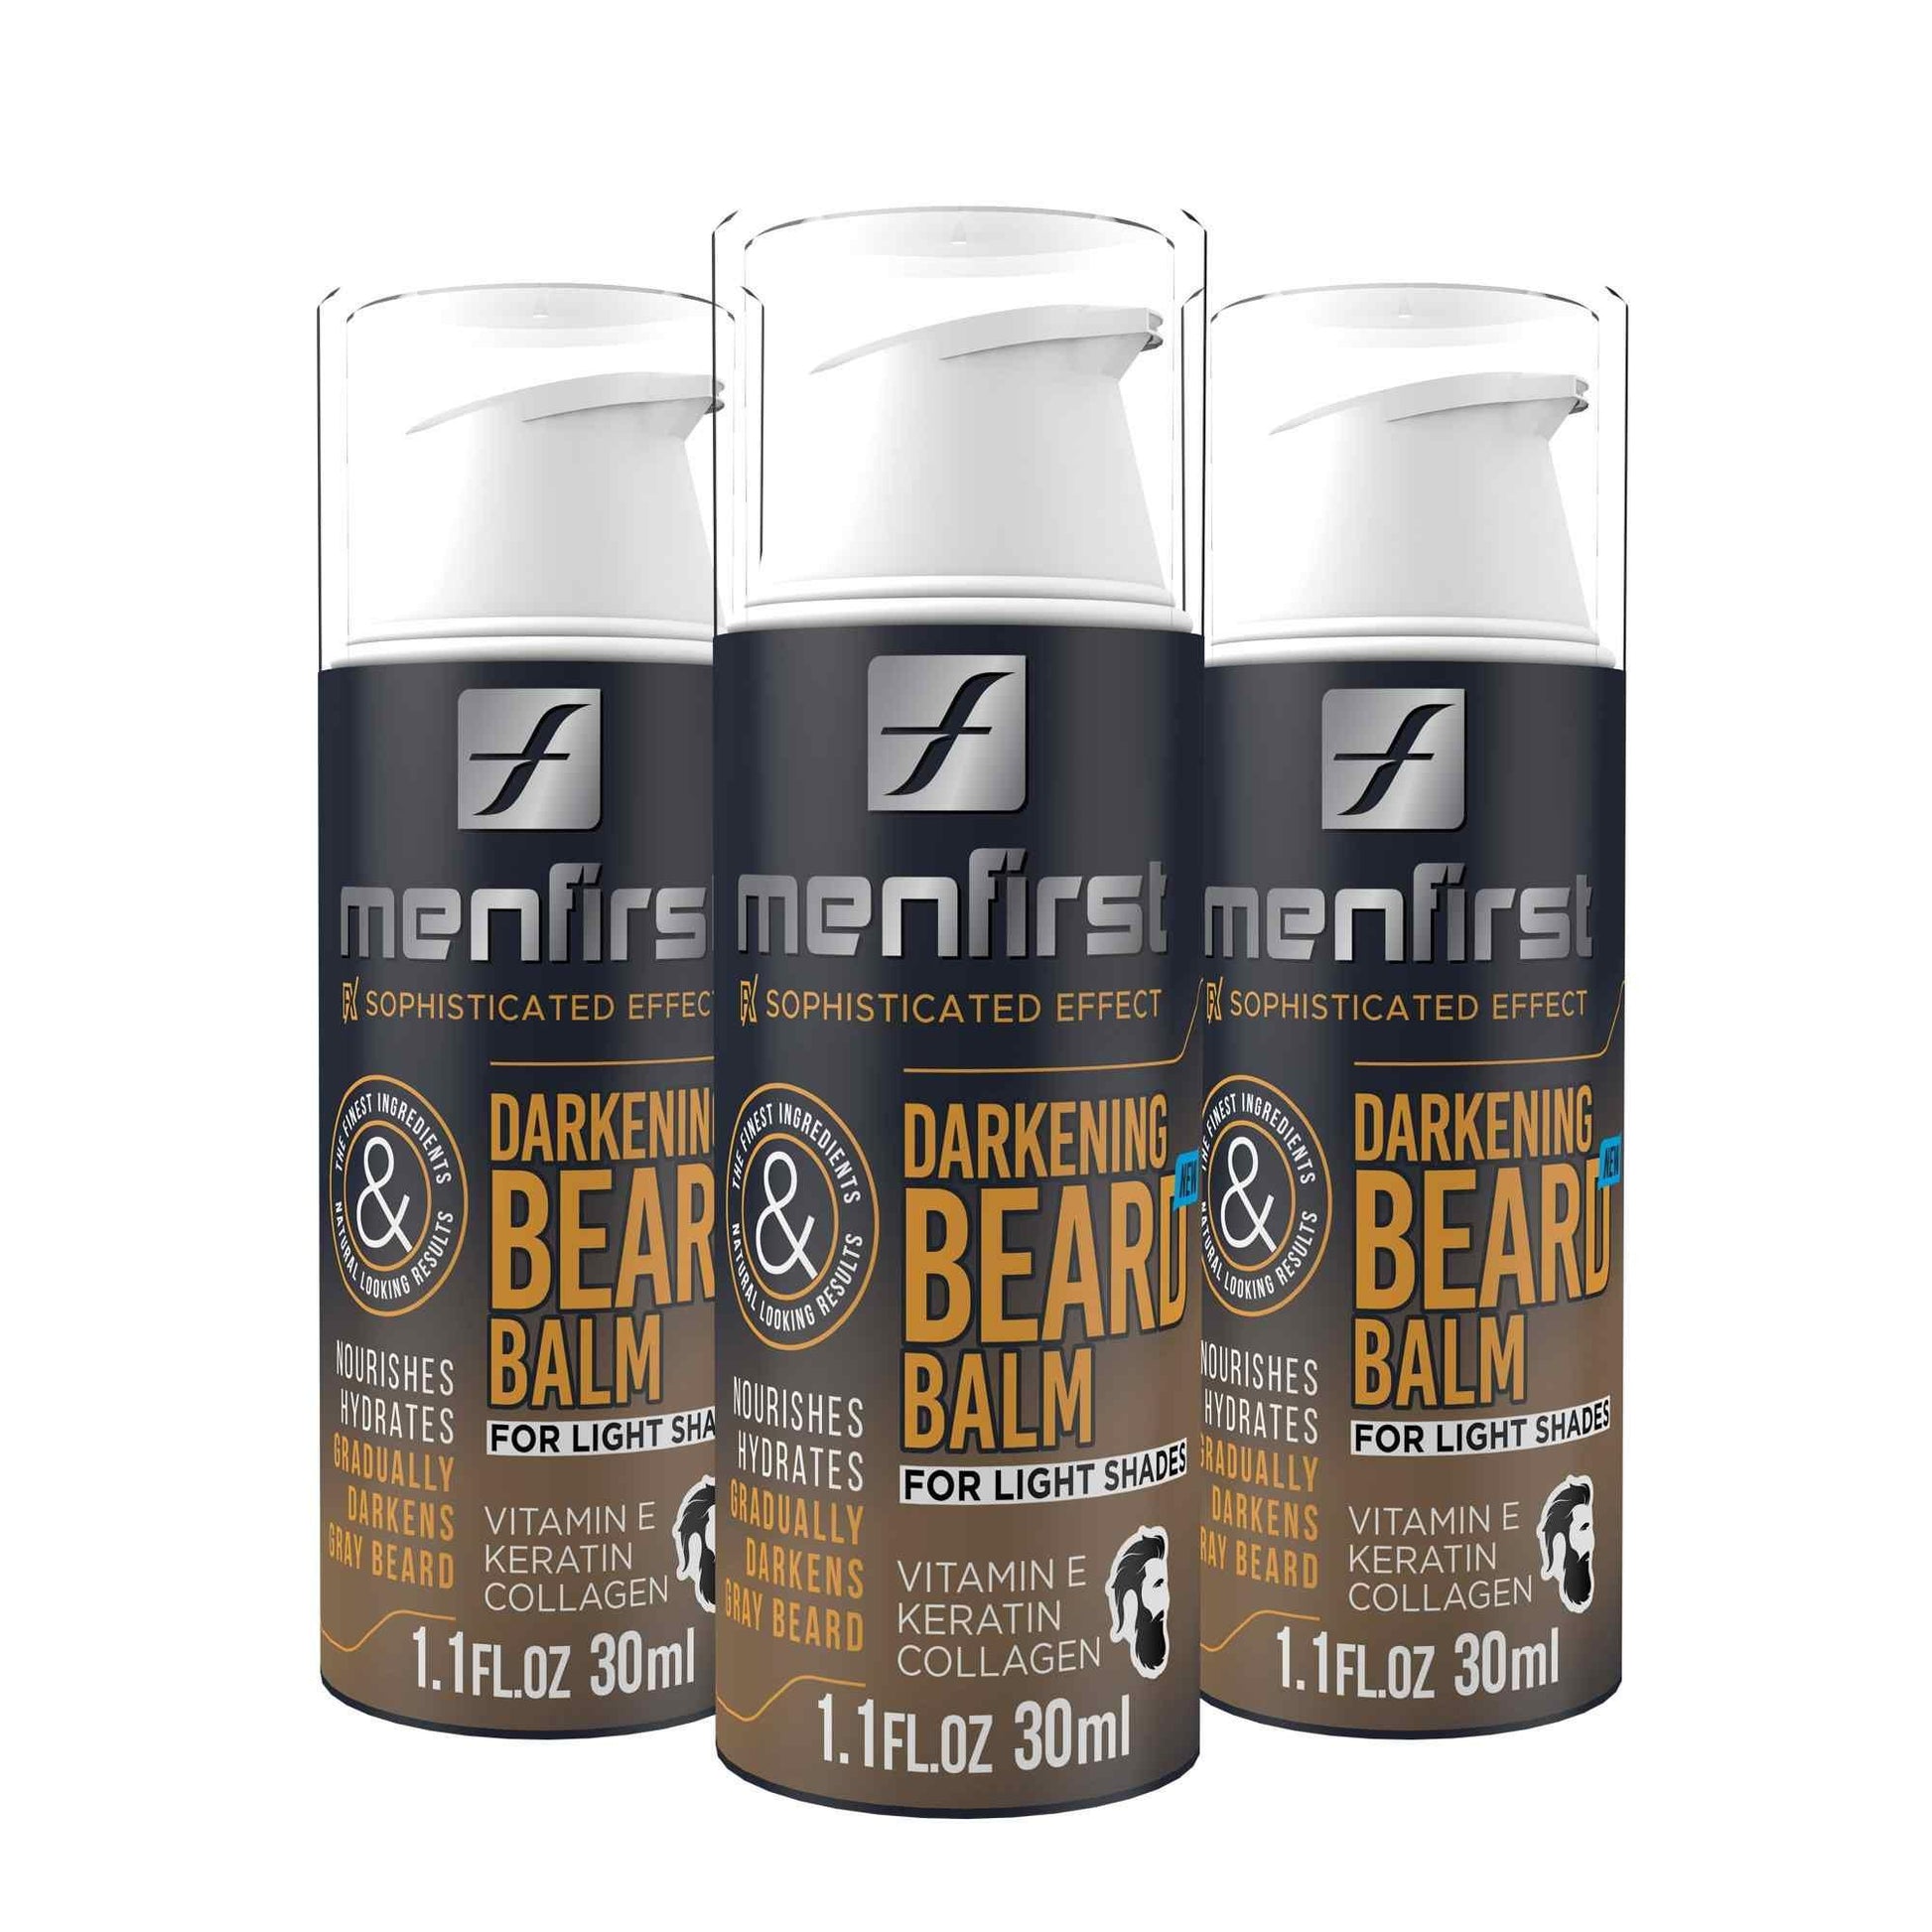 Leave-in Darkening Beard Balm - Menfirst - Dye hair